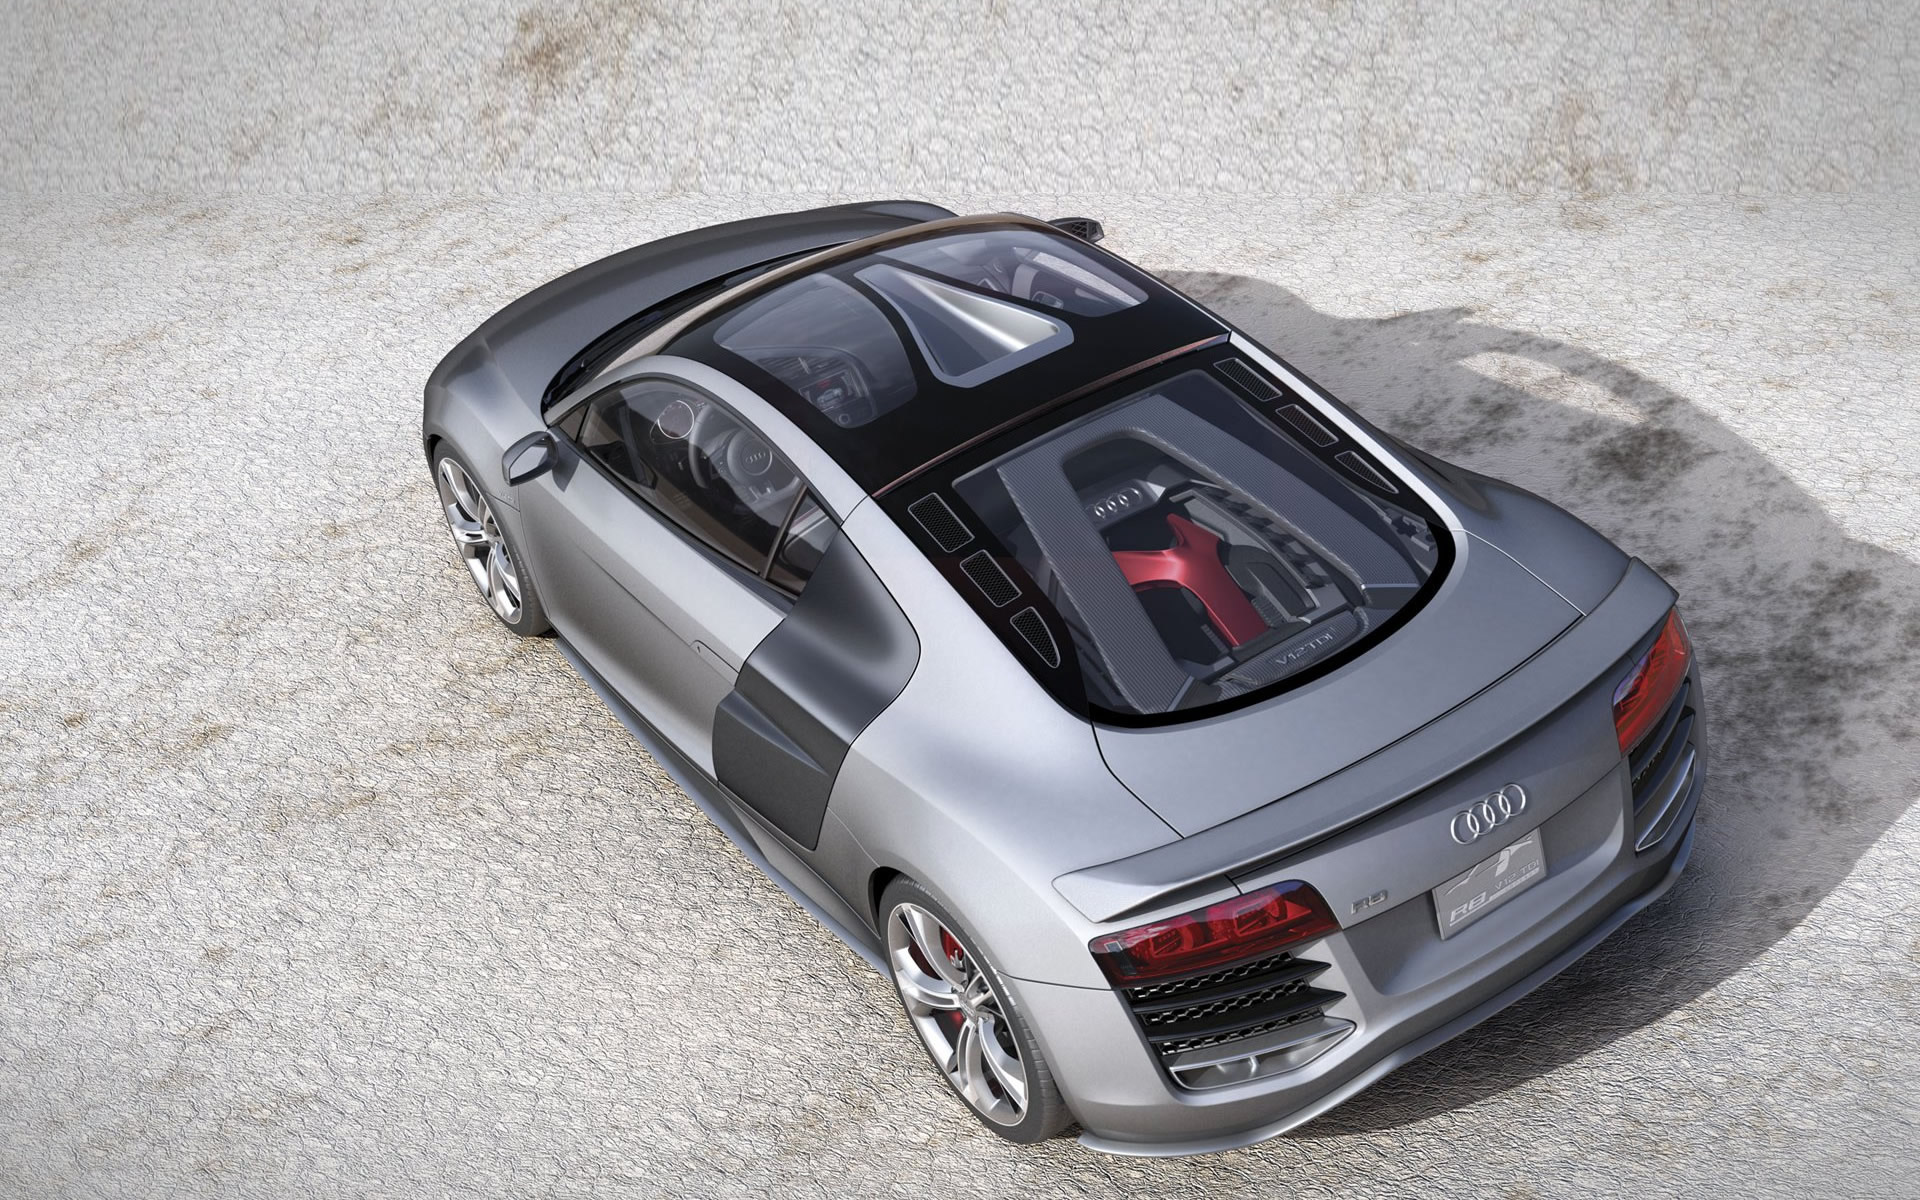 cars, vehicles, supercars, Audi R8, rear angle view - desktop wallpaper